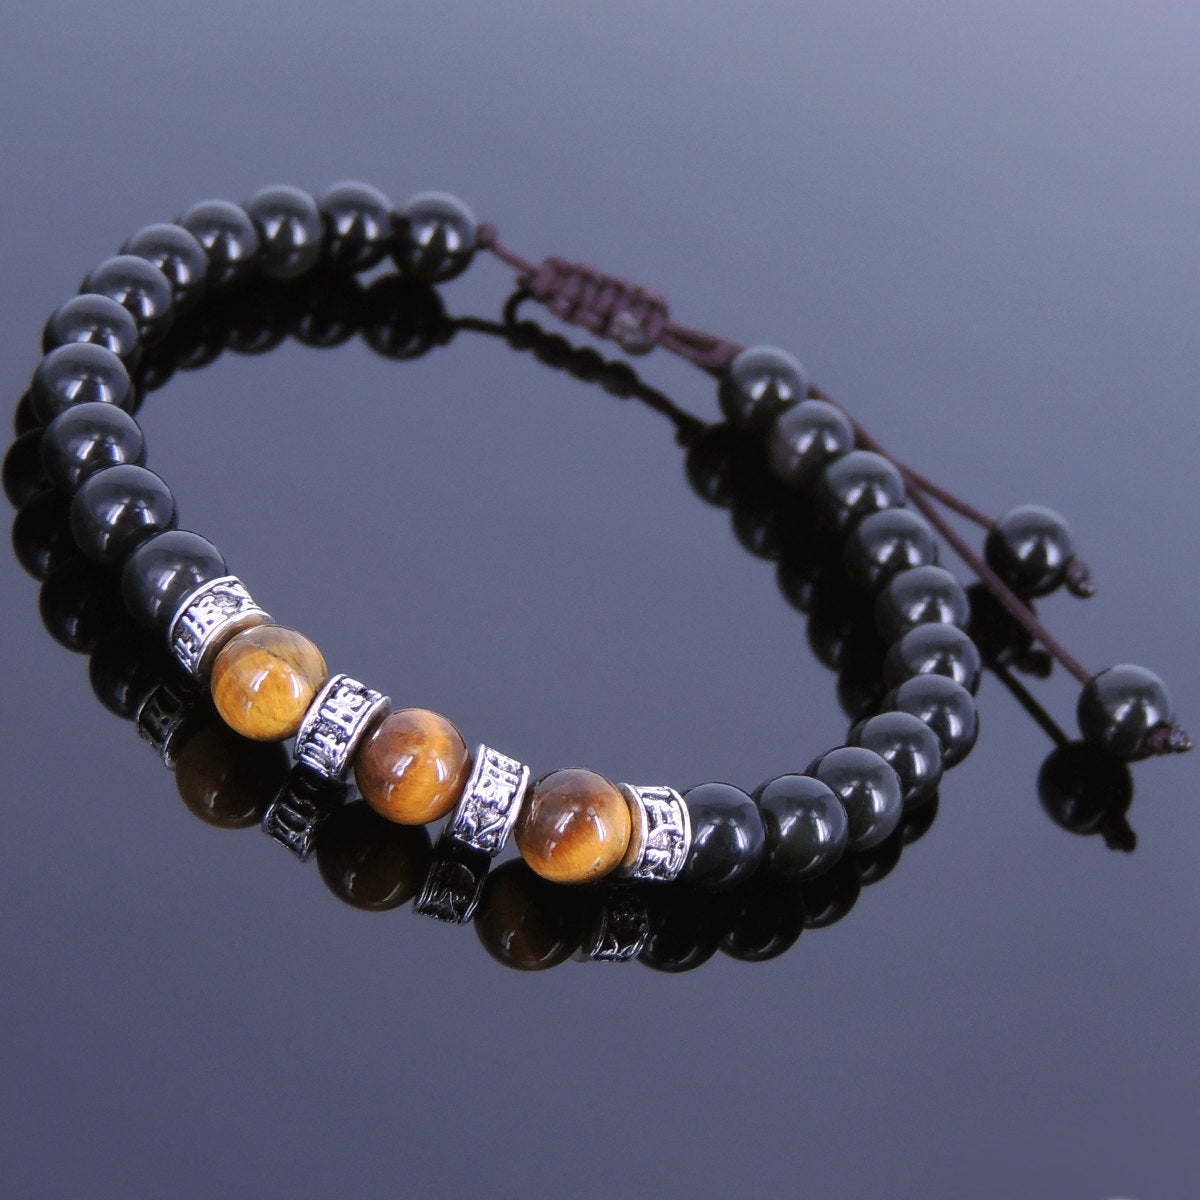 6mm Rainbow Black Obsidian & Brown Tiger Eye Adjustable Braided Bracelet with Tibetan Silver Buddhism OM Meditation Spacer Beads - Handmade by Gem & Silver TSB114